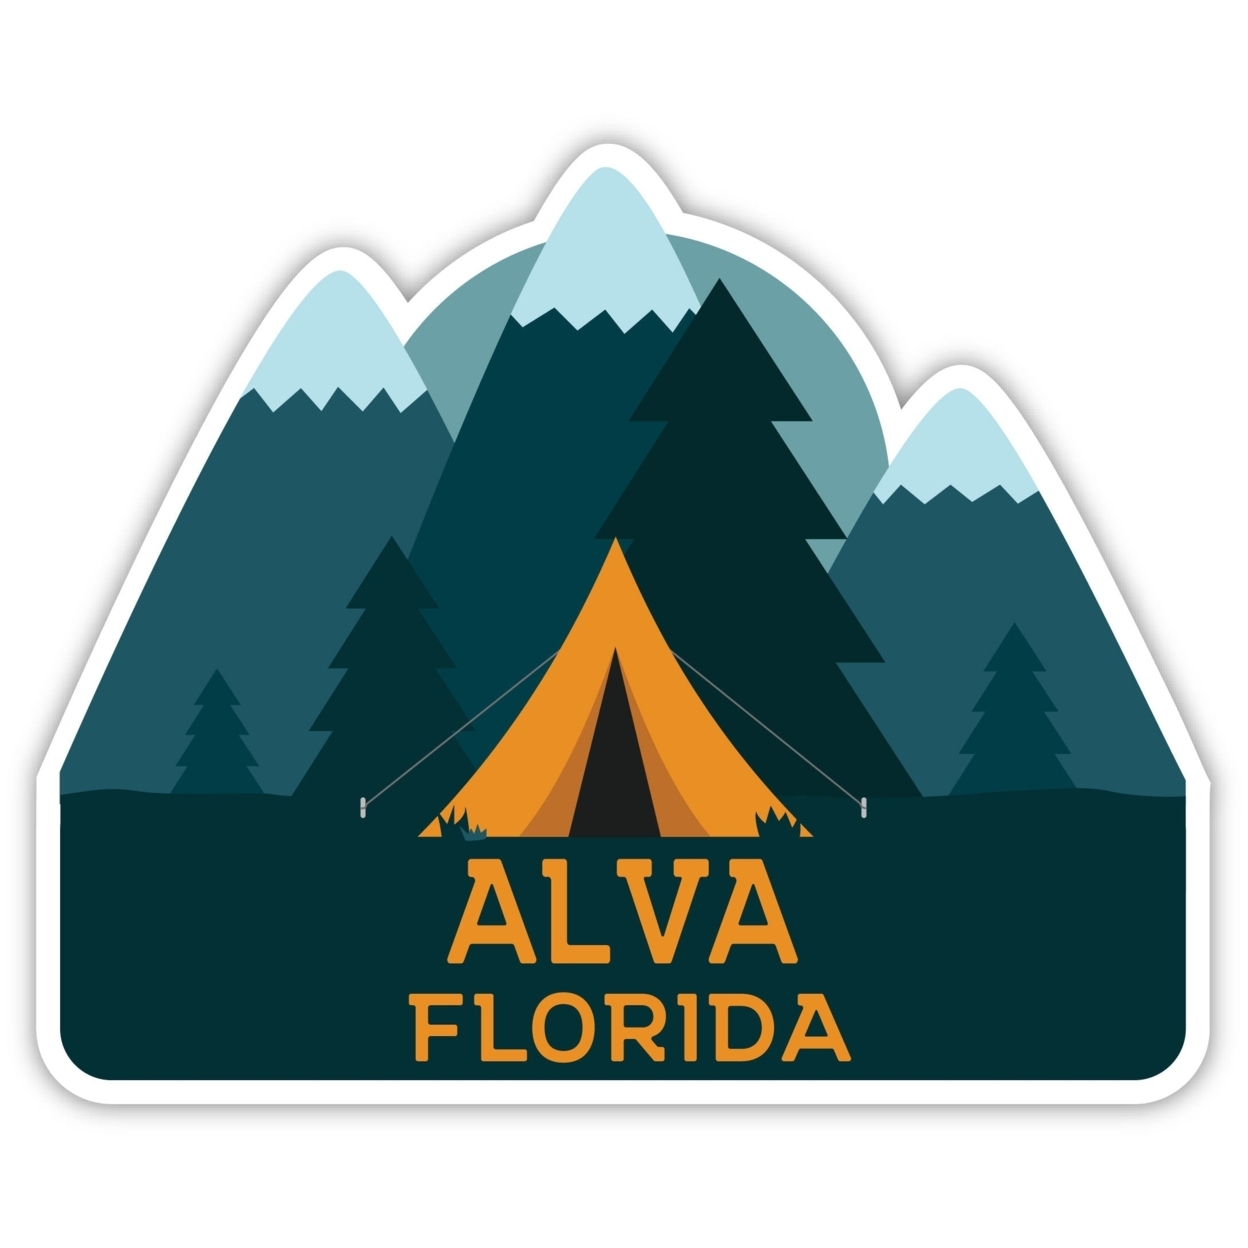 Alva Florida Souvenir Decorative Stickers (Choose Theme And Size) - 4-Pack, 4-Inch, Tent